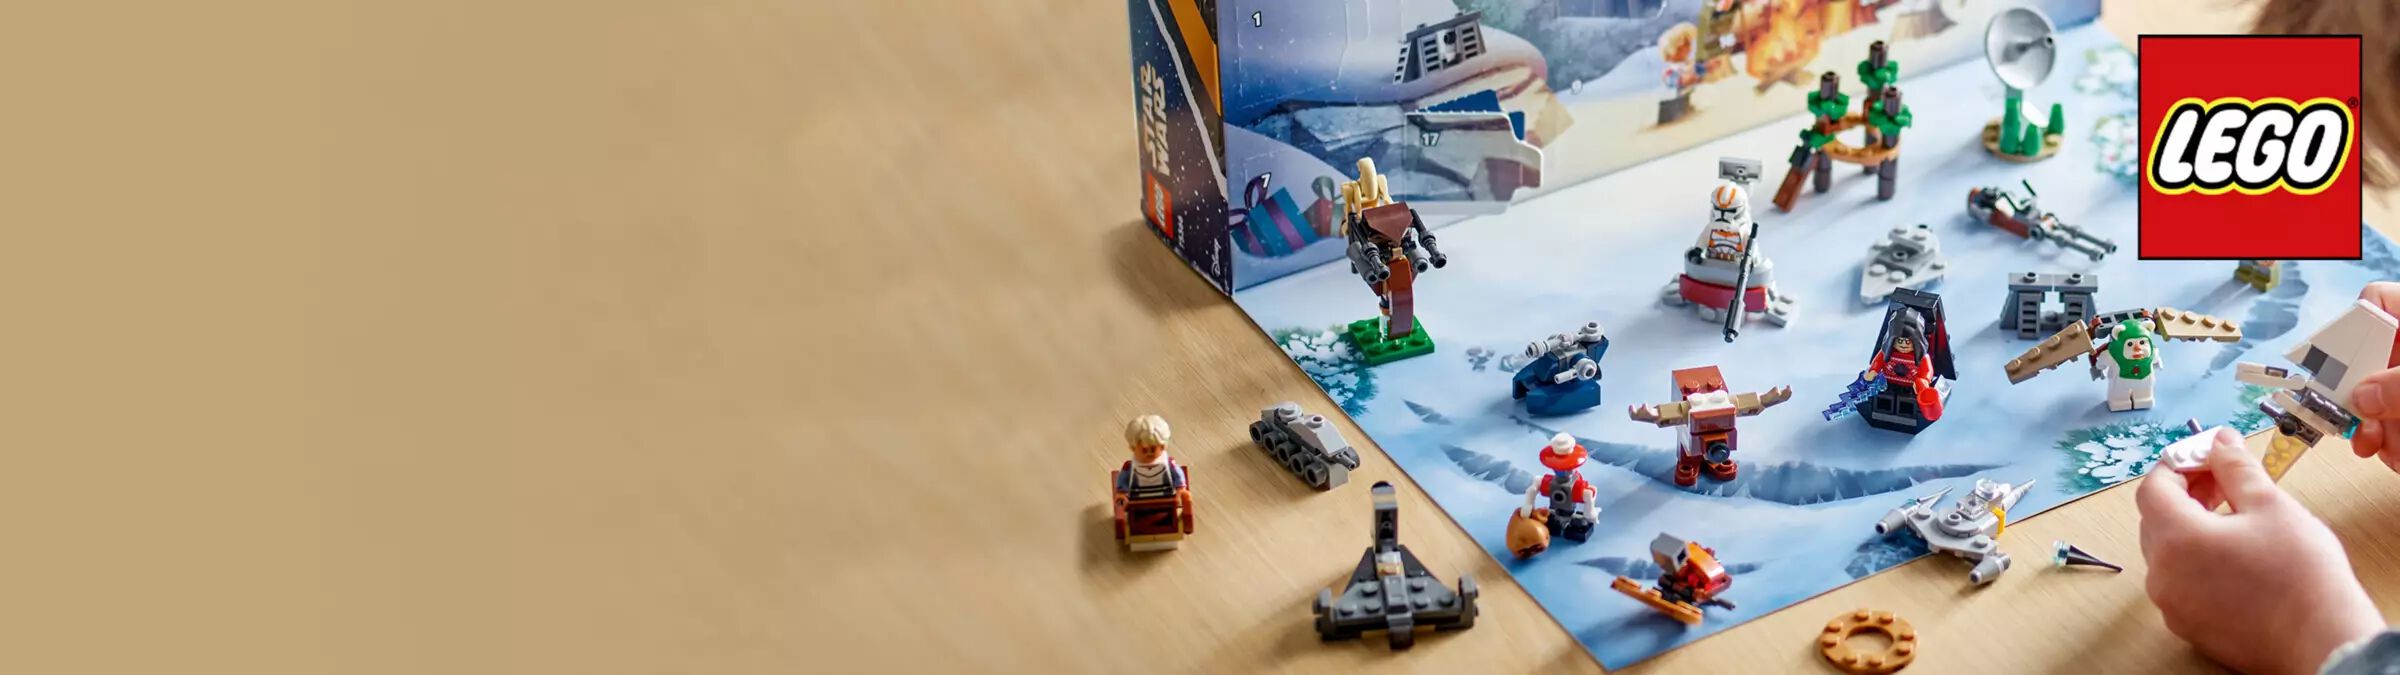 Star Wars legos showcased on a wodden table